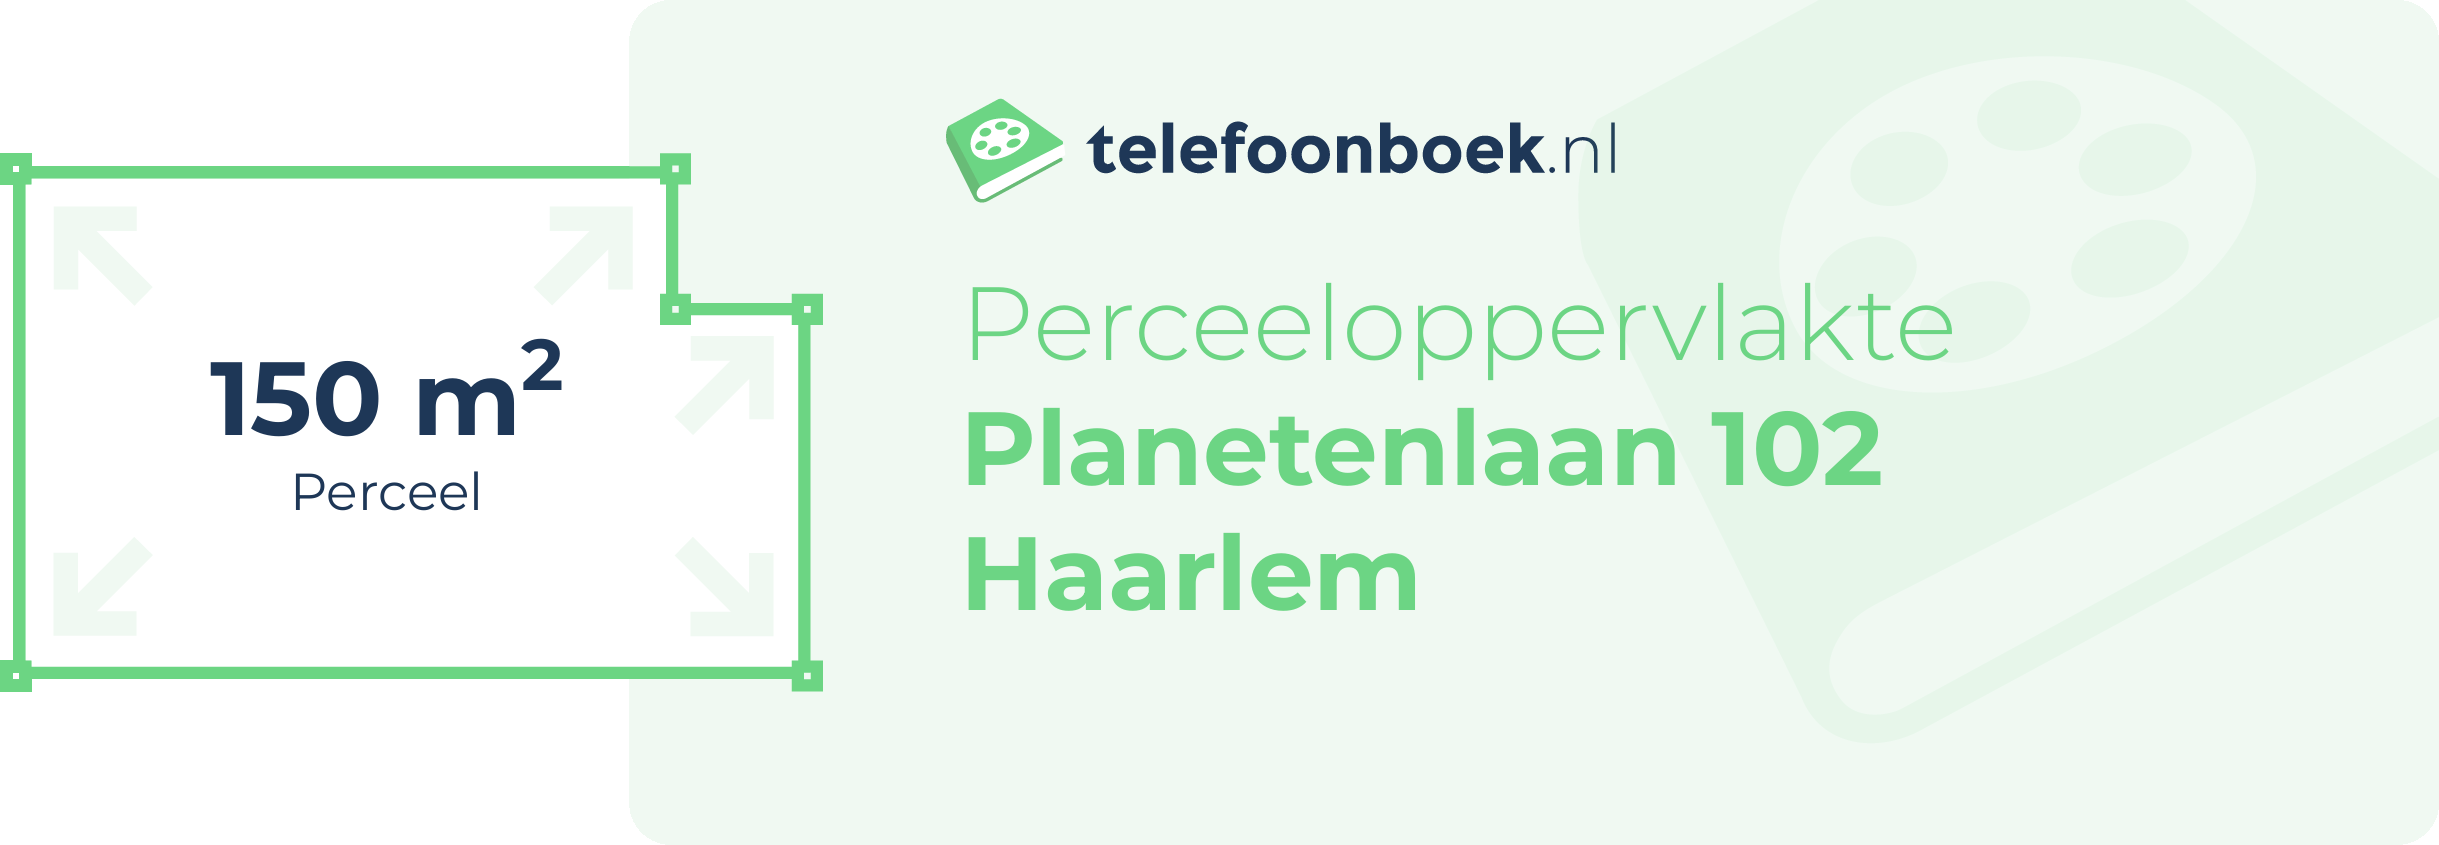 Perceeloppervlakte Planetenlaan 102 Haarlem